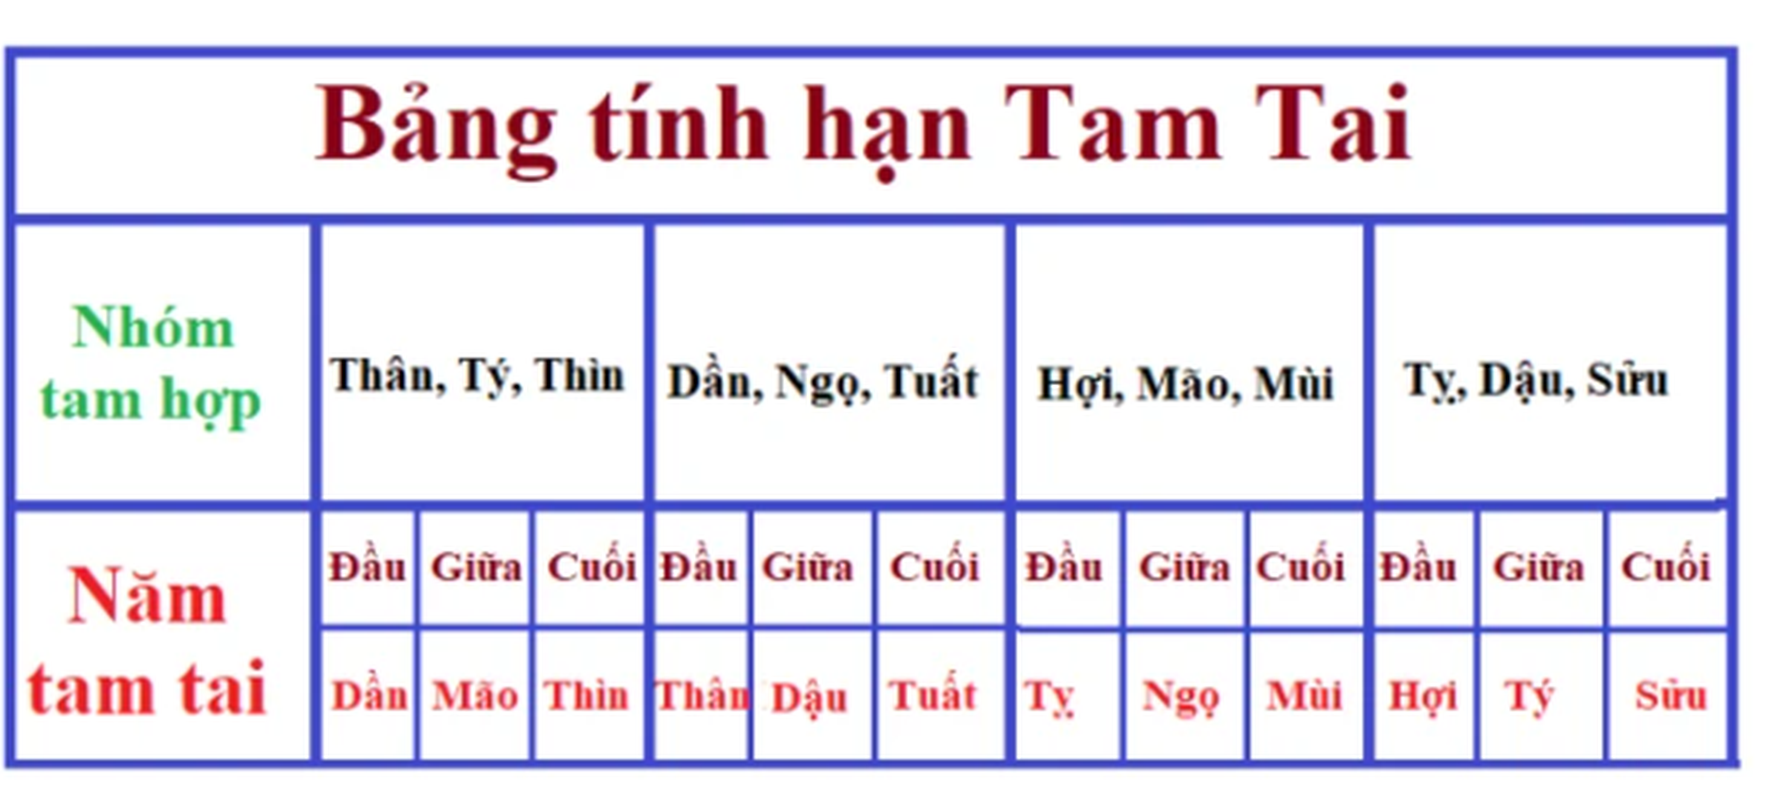 Sang 2022: Con giap vua vuong Tam Tai, vua xung Thai Tue, xui du duong-Hinh-2